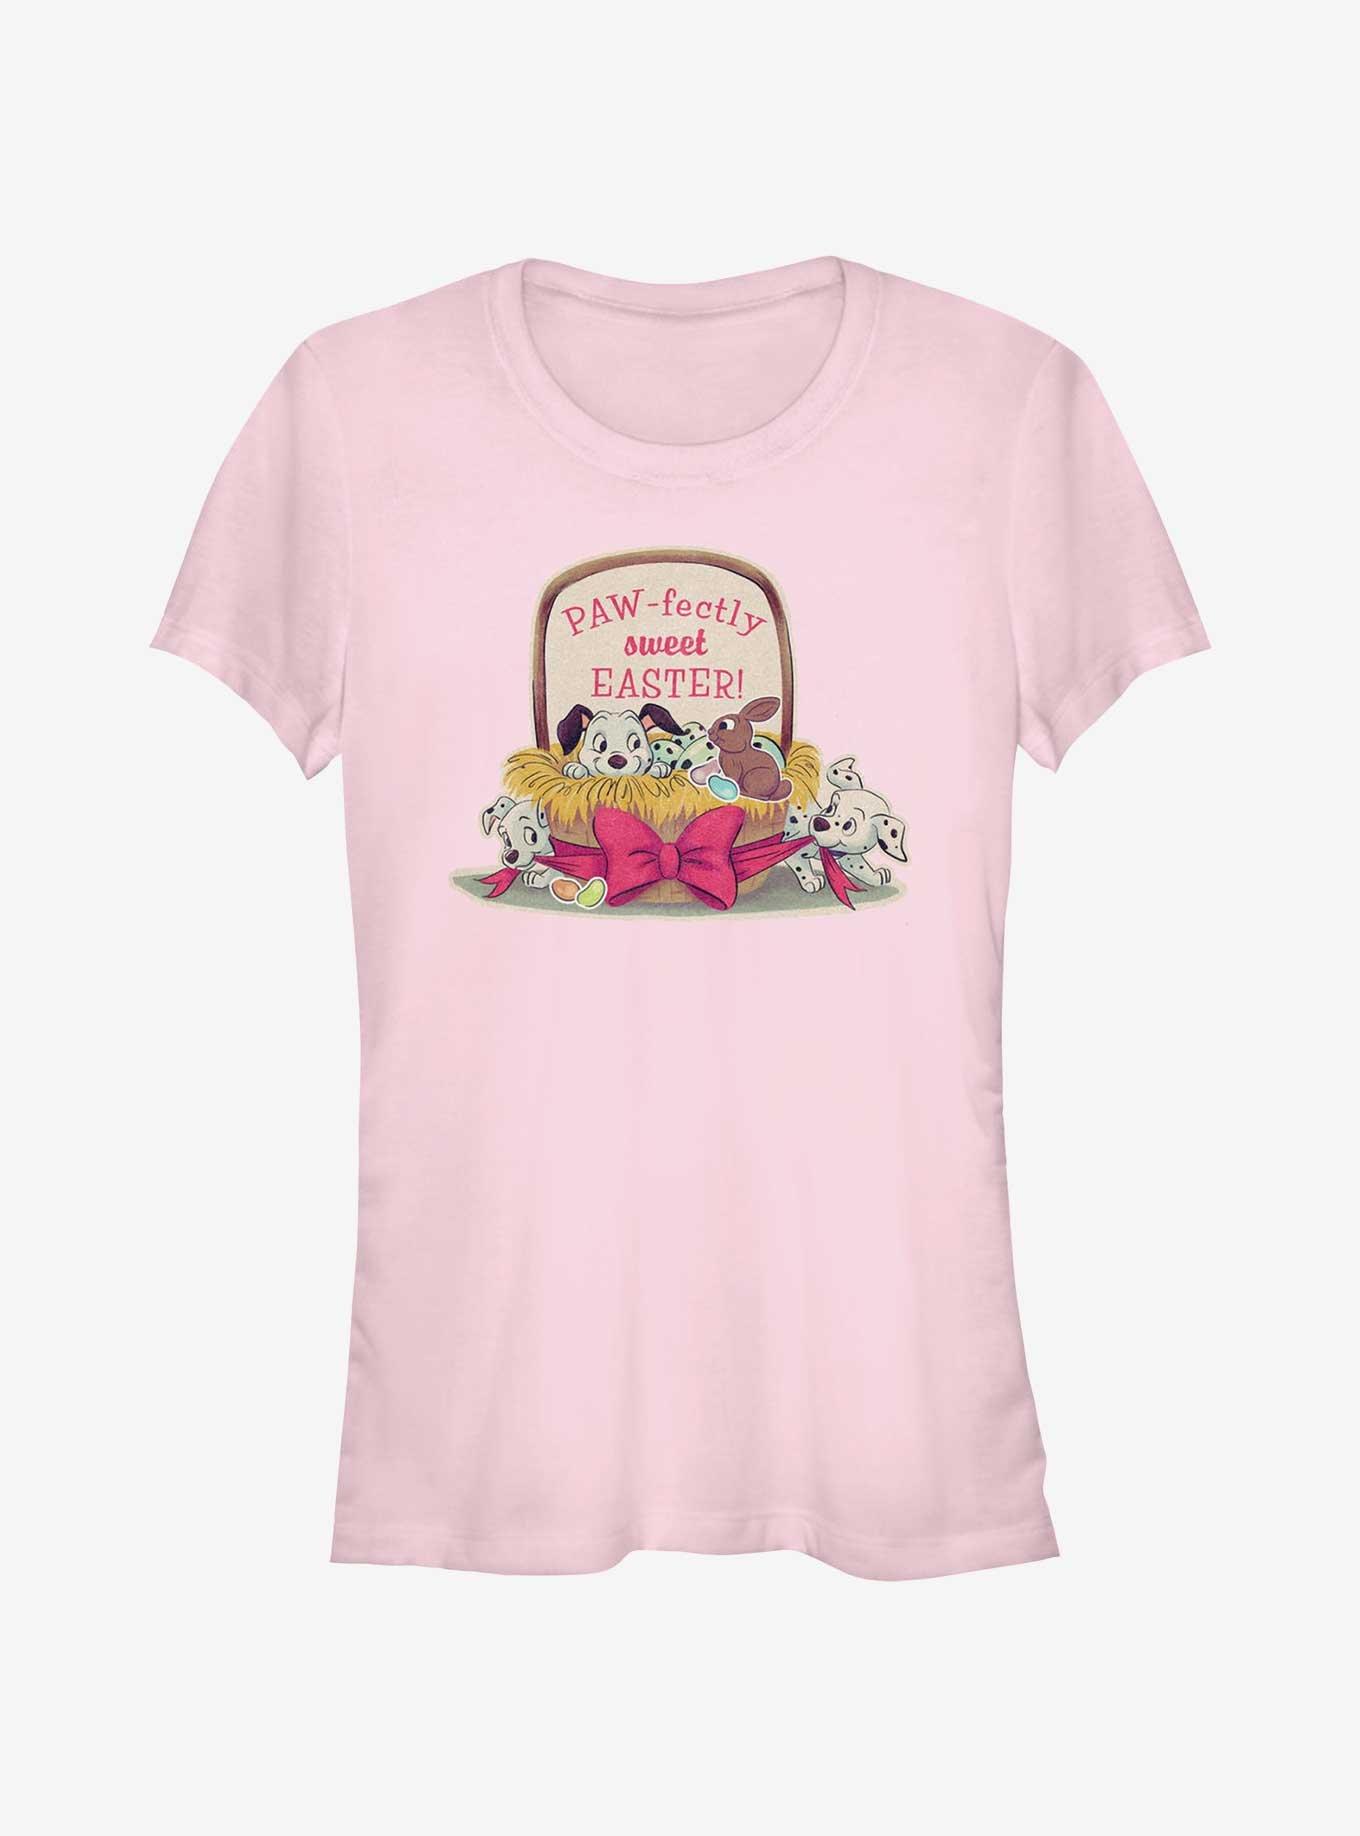 Disney 101 Dalmatians Paw-Fectly Sweet Easter Girls T-Shirt